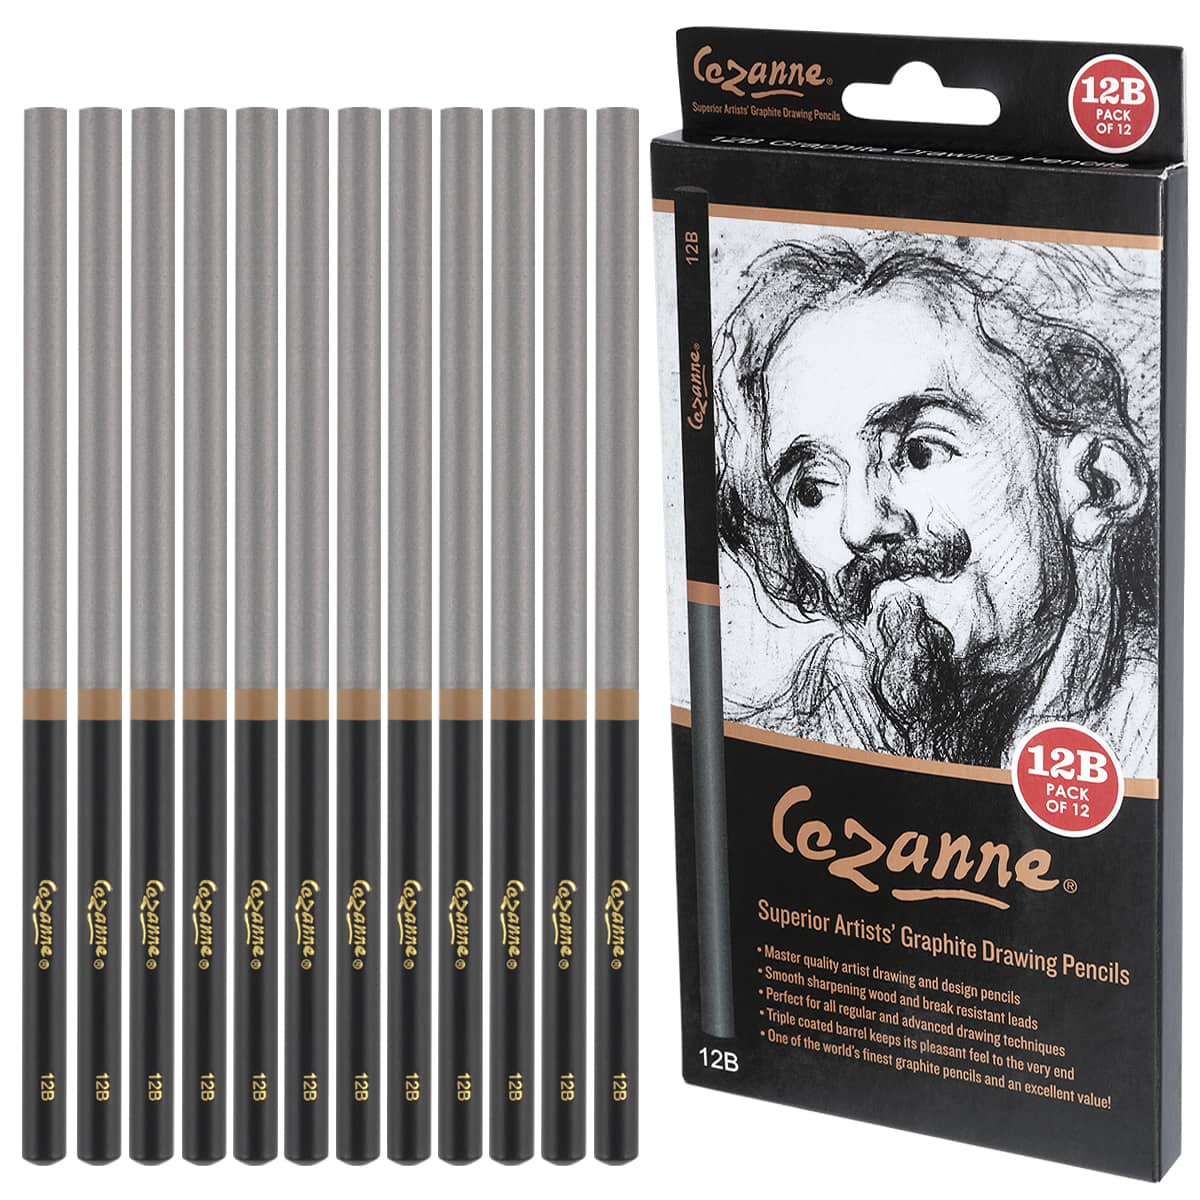 Cezanne Graphite Pencil #12B, Pack of 12 Pencils